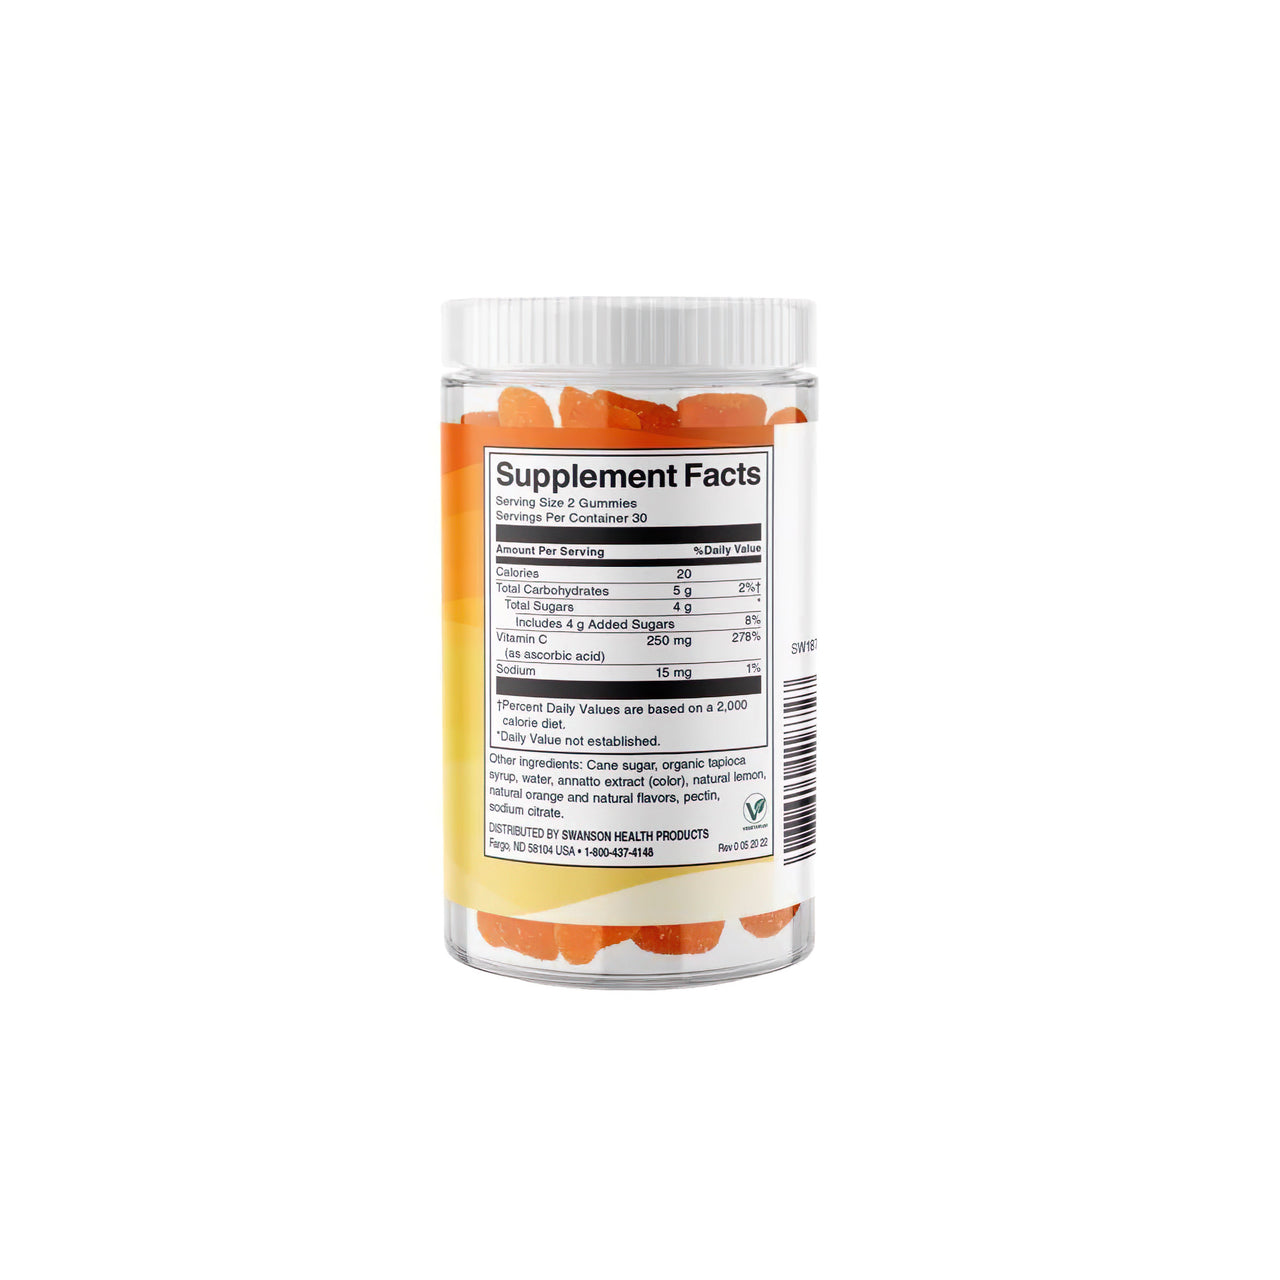 A jar of Swanson Vitamin C 250 mg 60 Gummies - Orange dietary supplements on a white background.